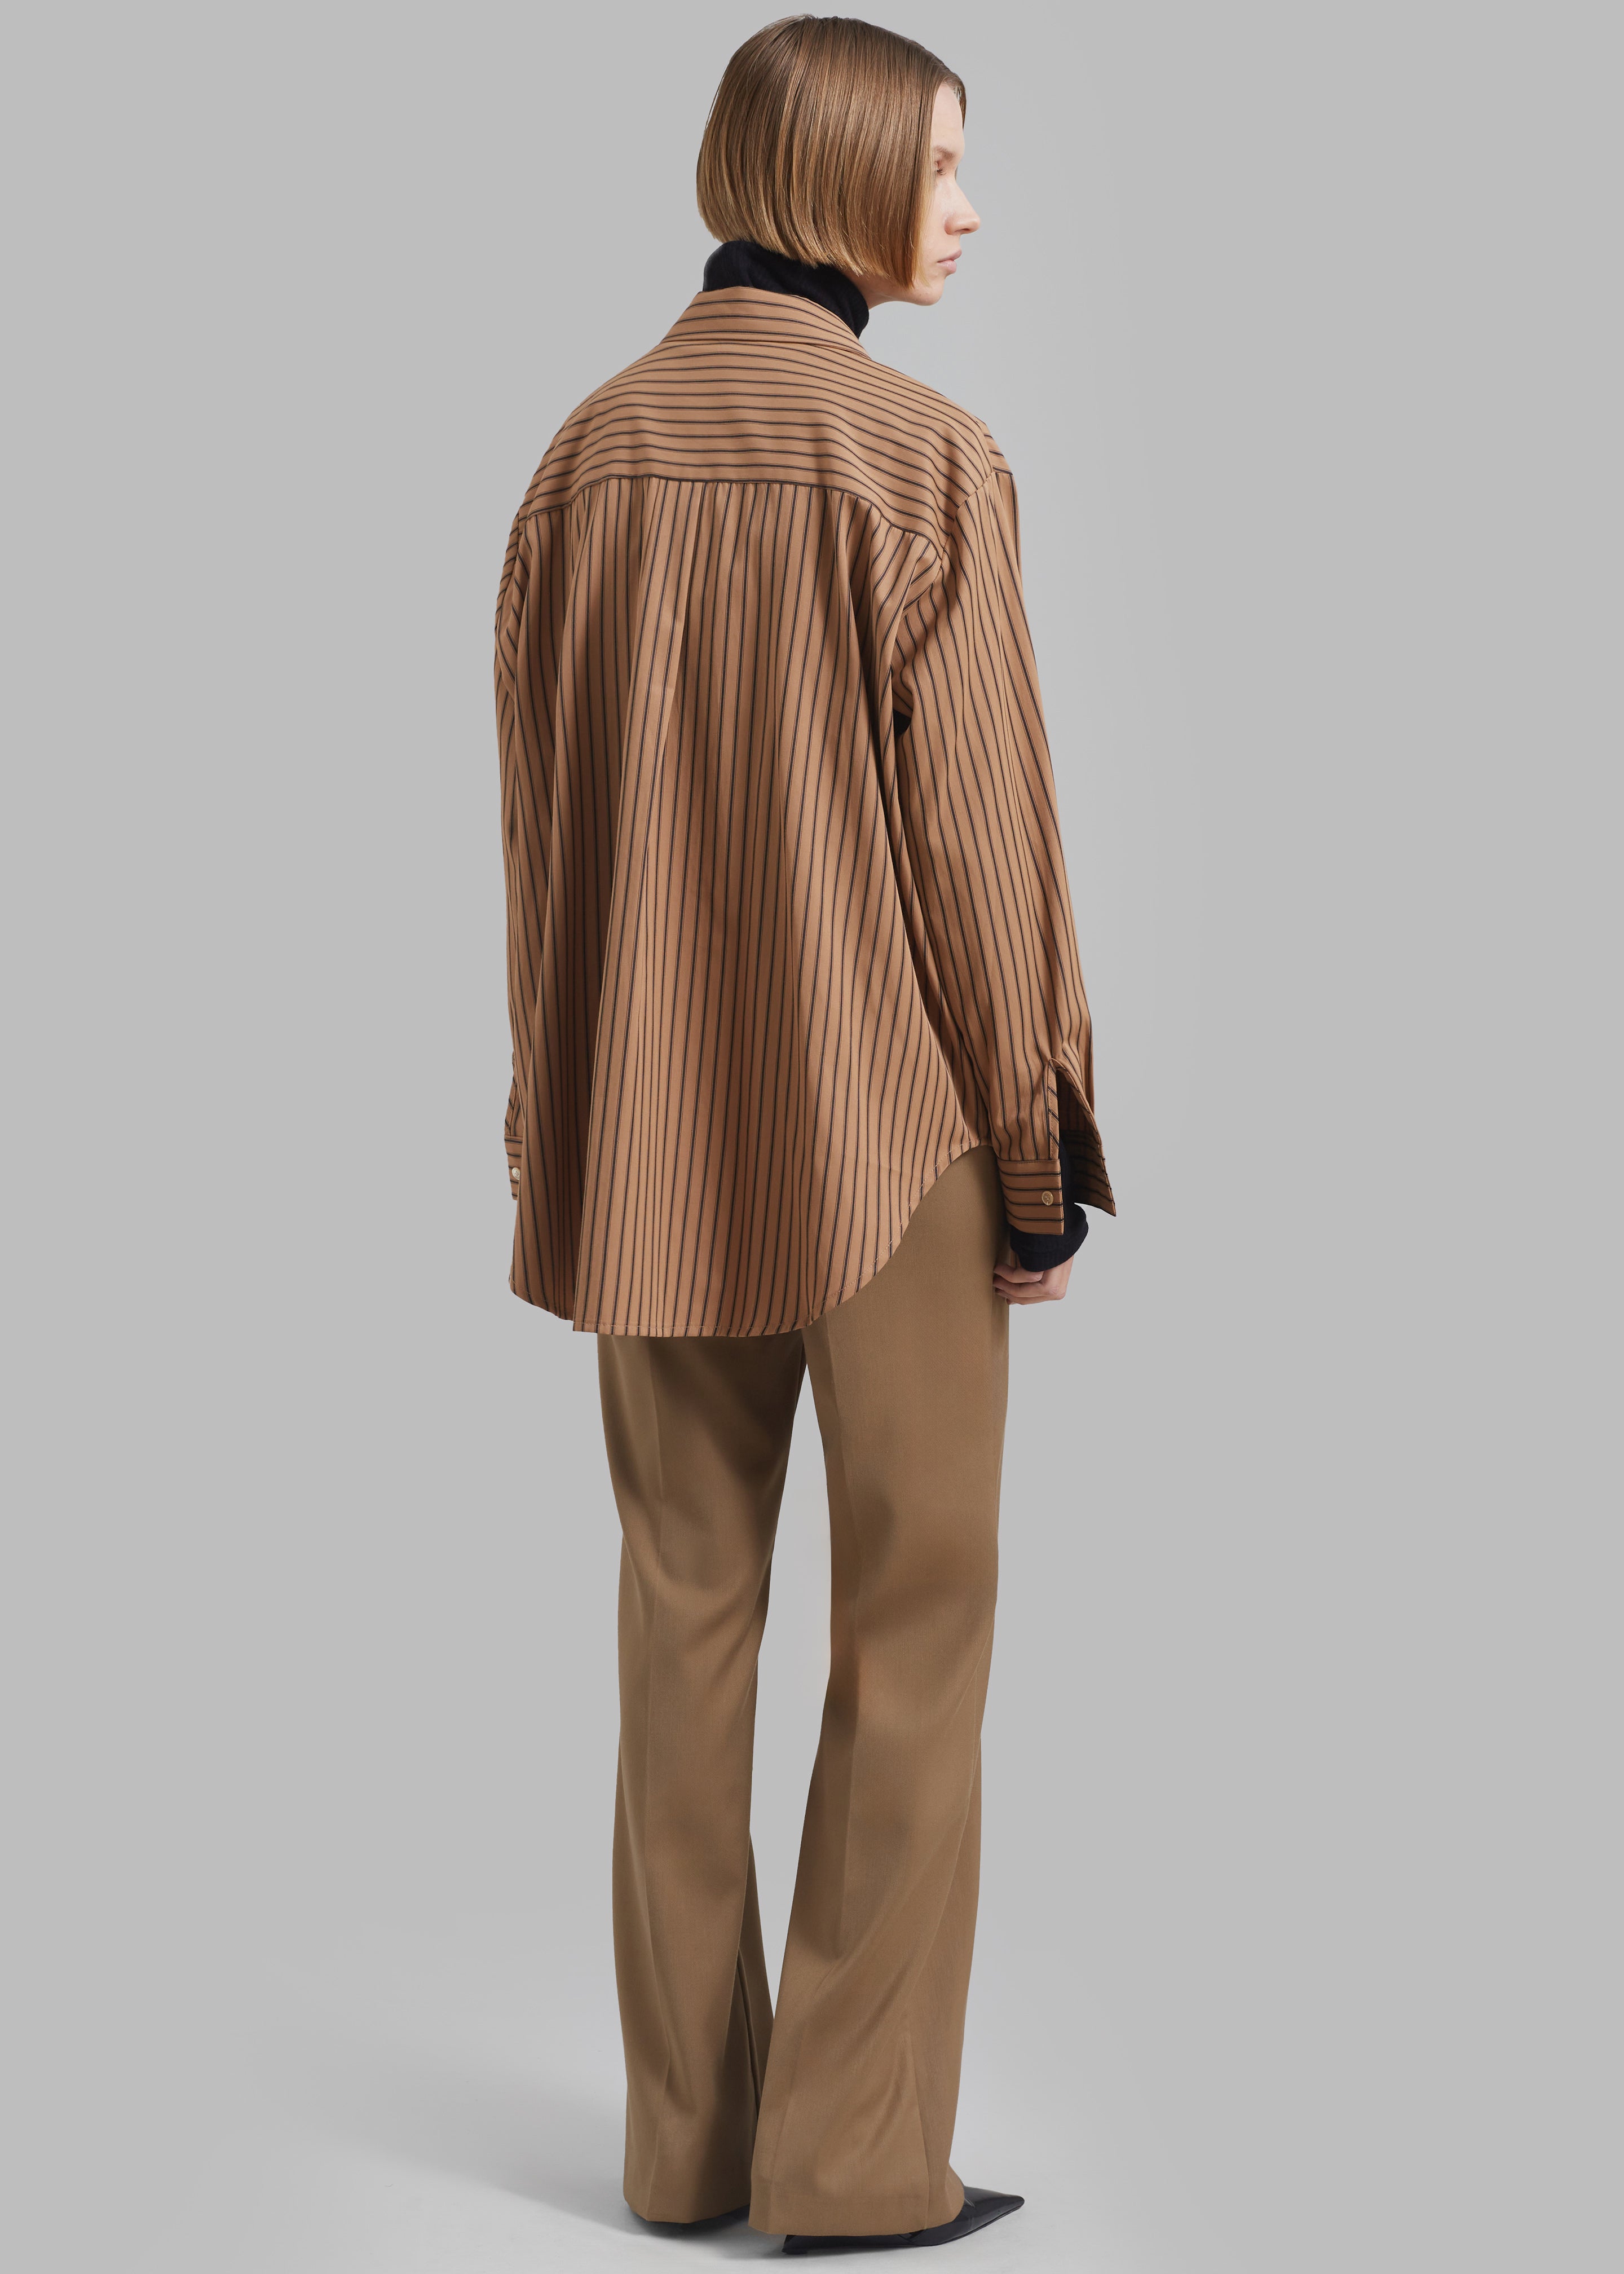 Rine Pocket Shirt - Camel/Black Stripe - 8